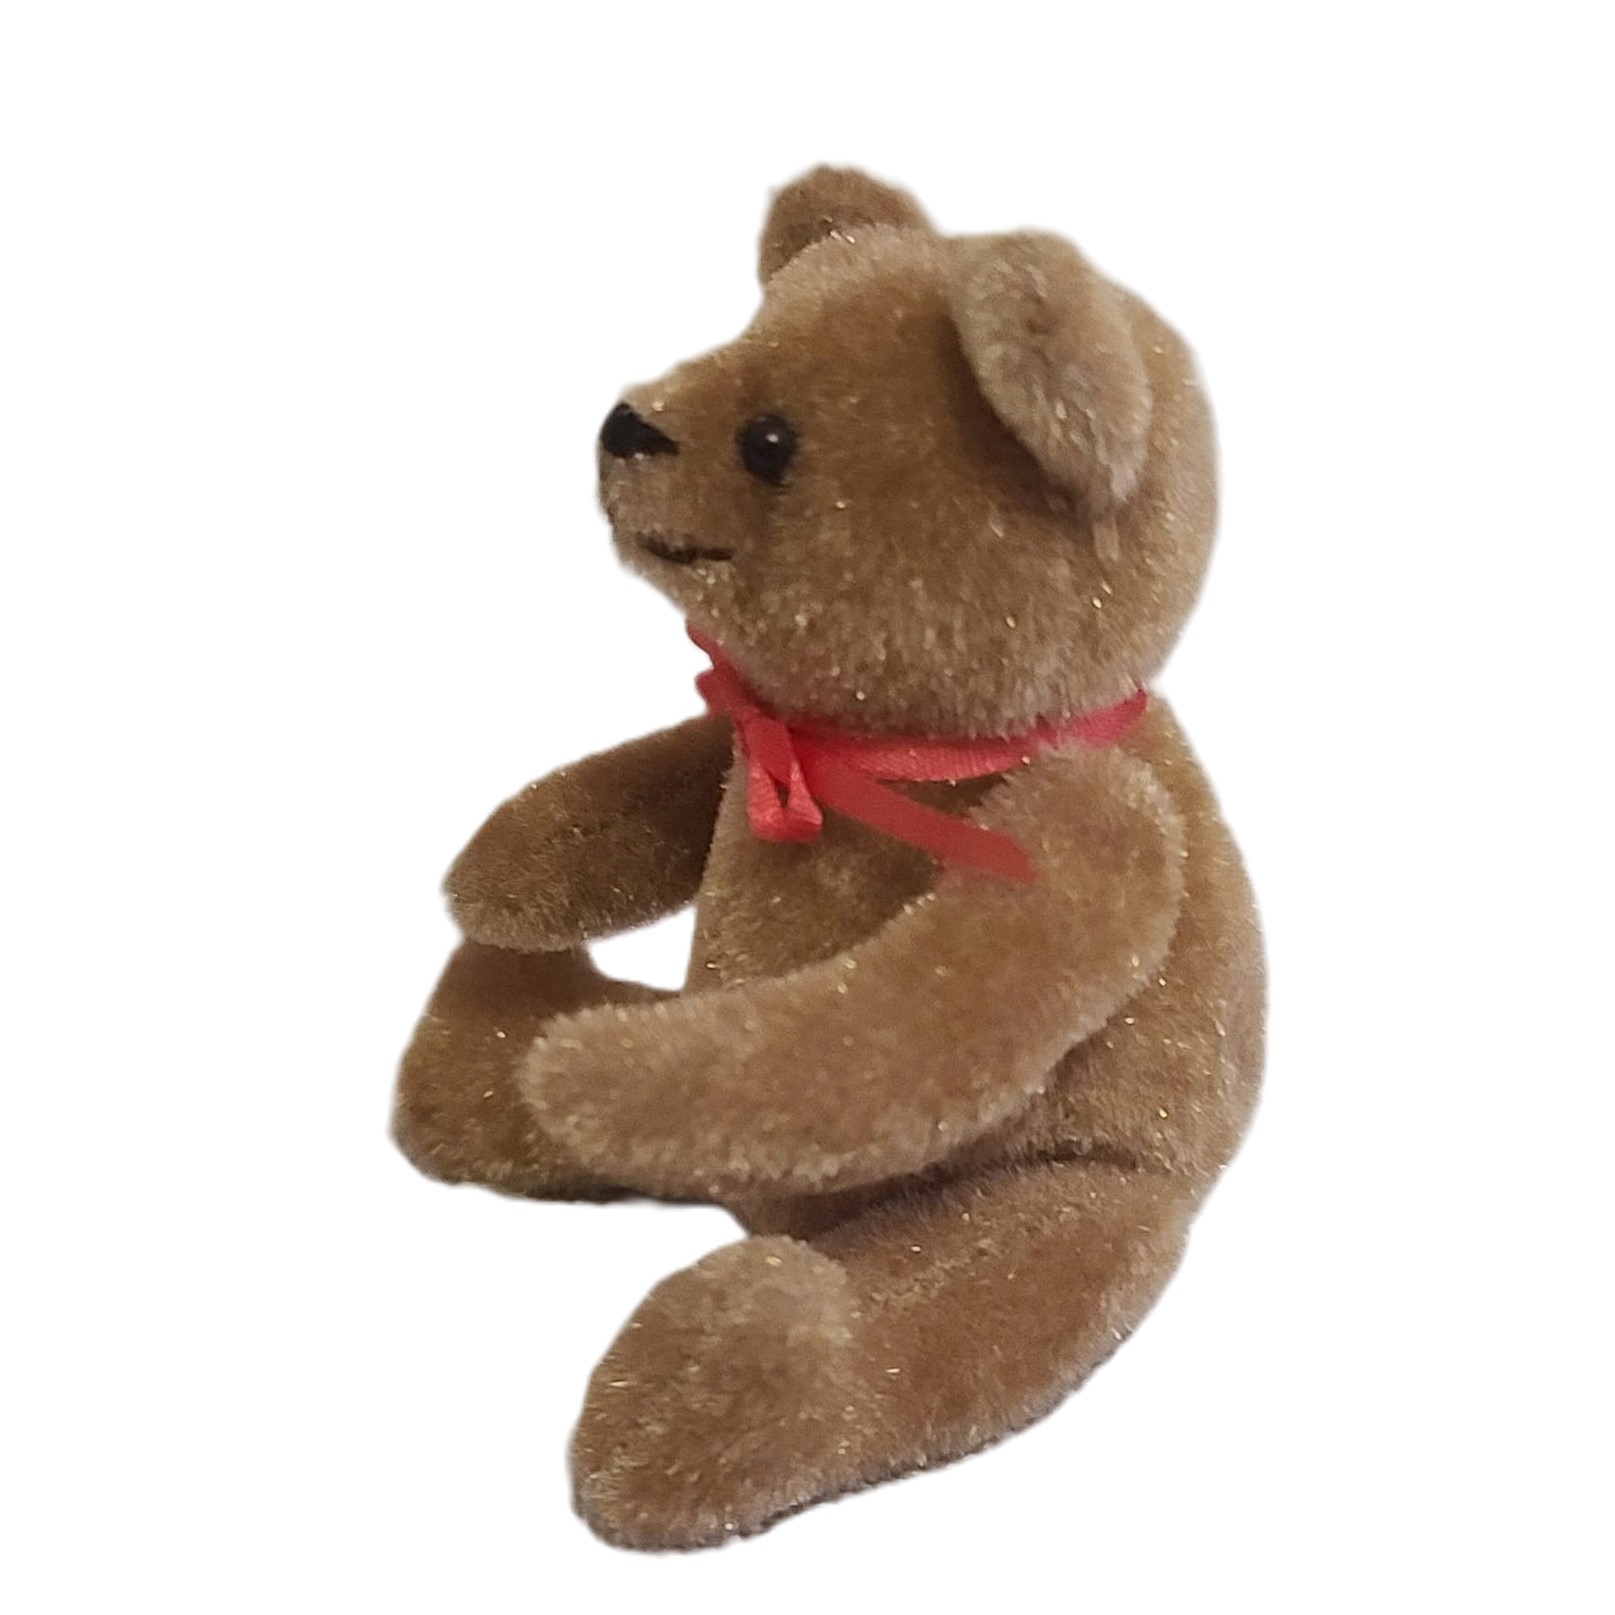 Vintage mini bear jointed bear 4" tall